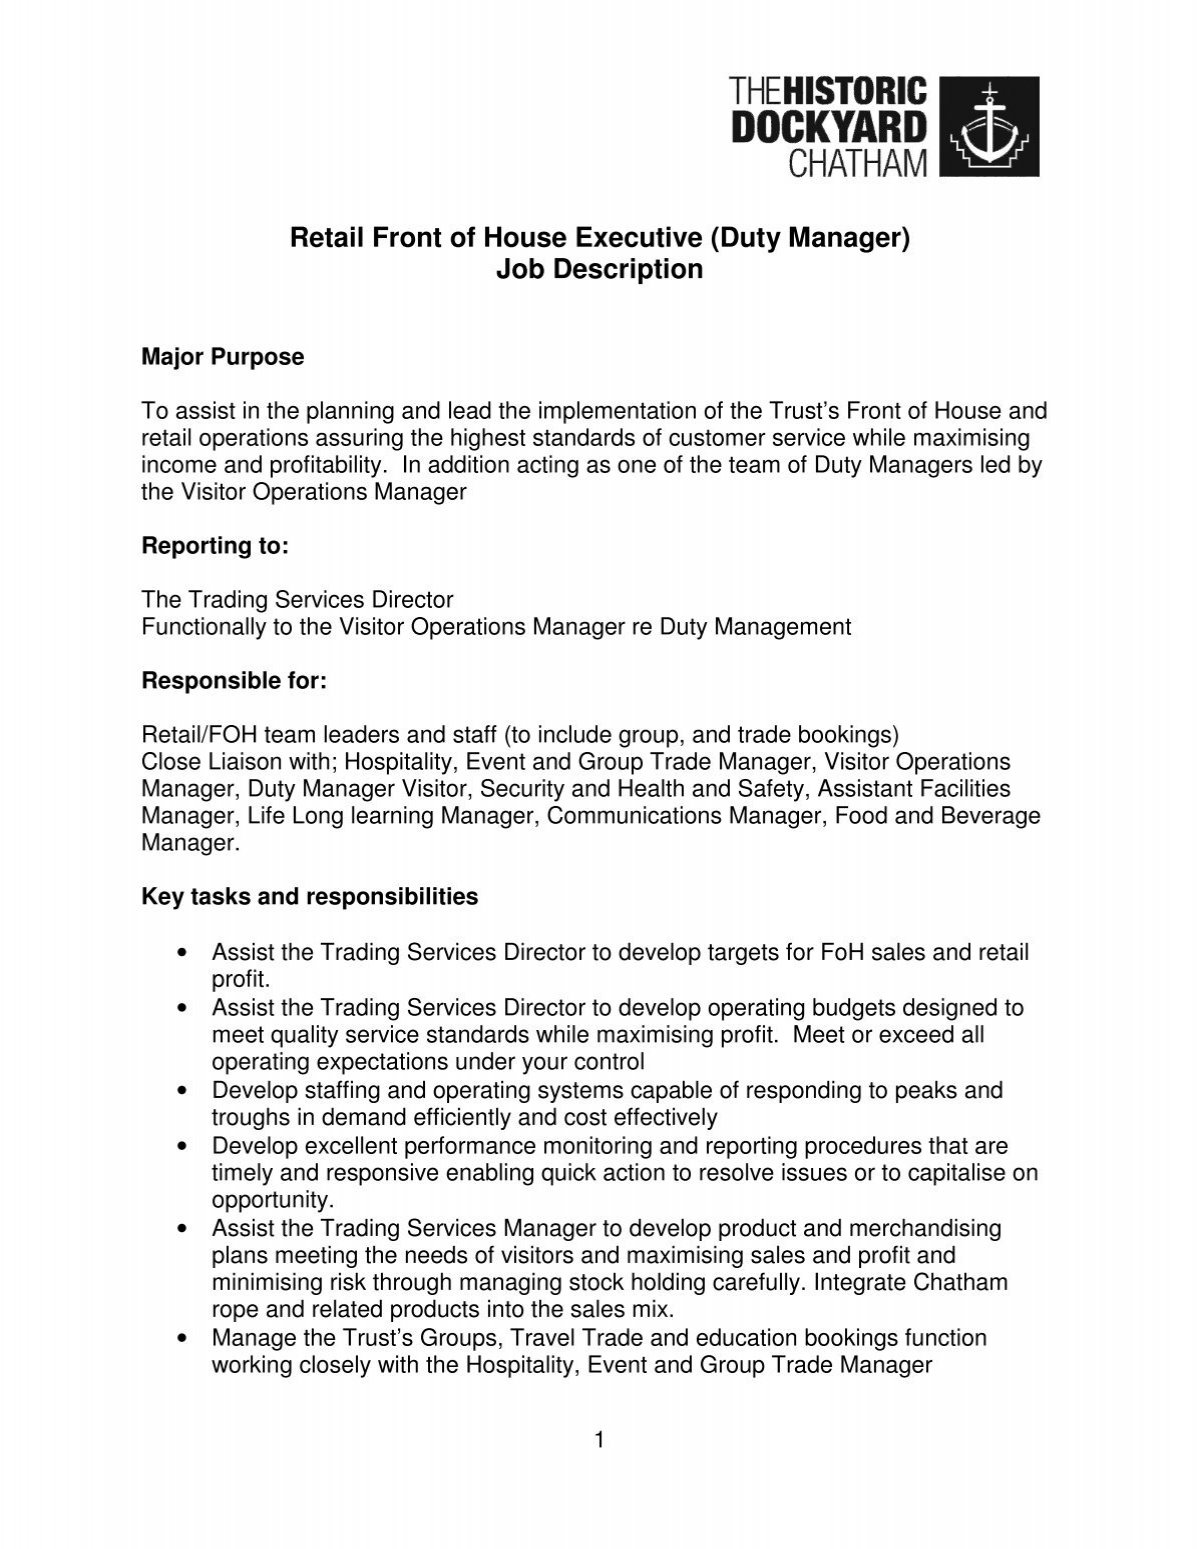 Retail Front of House Executive (Duty Manager) Job Description